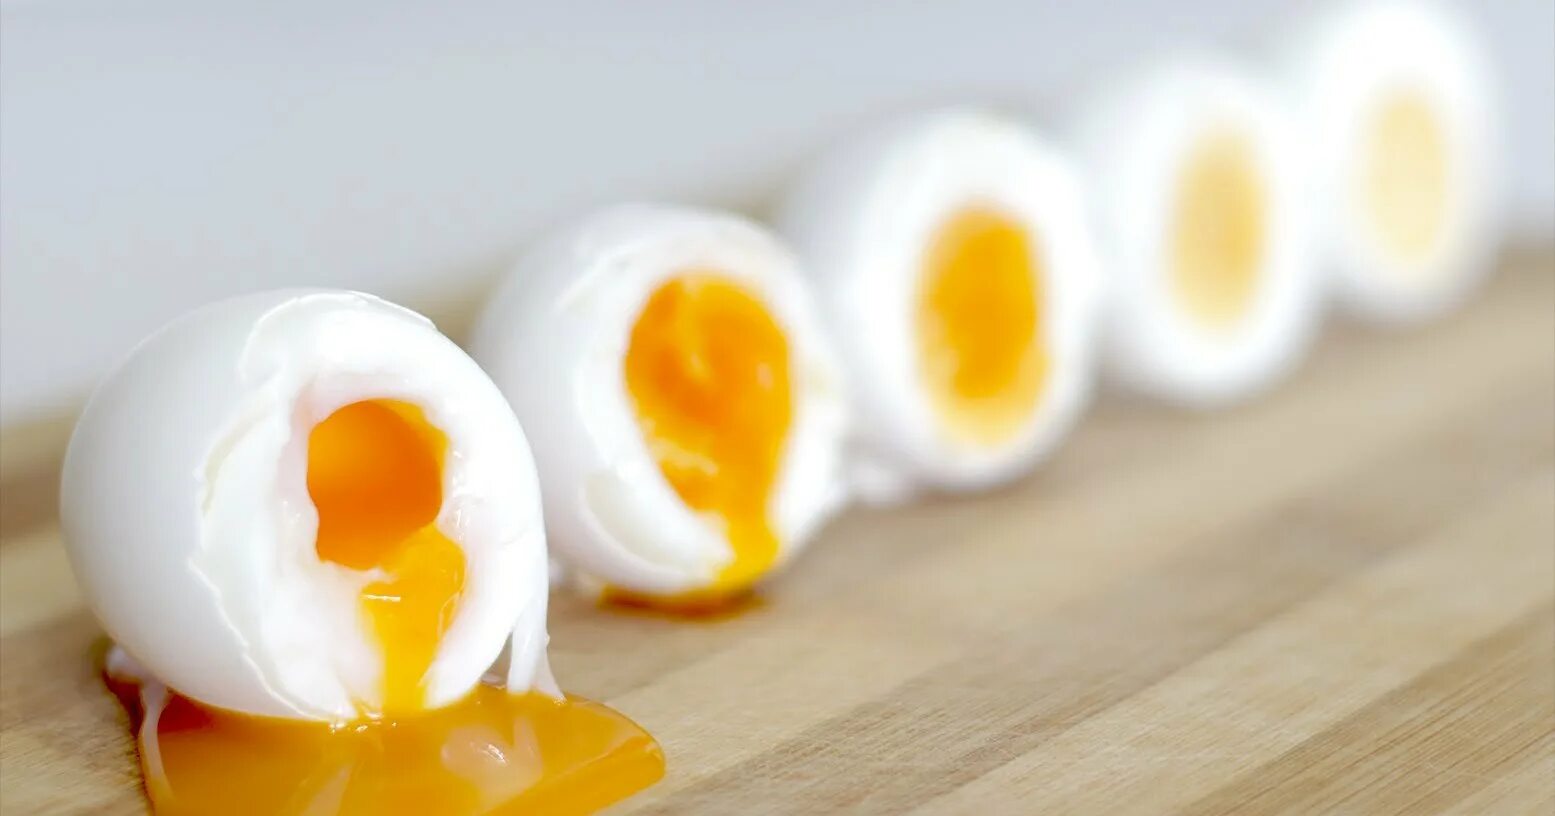 Яйцо всмятку яйца вкрутую. Яйцо вареное всмятку. Яйца куриные вареные всмятку. Перепелиные яйца всмятку.